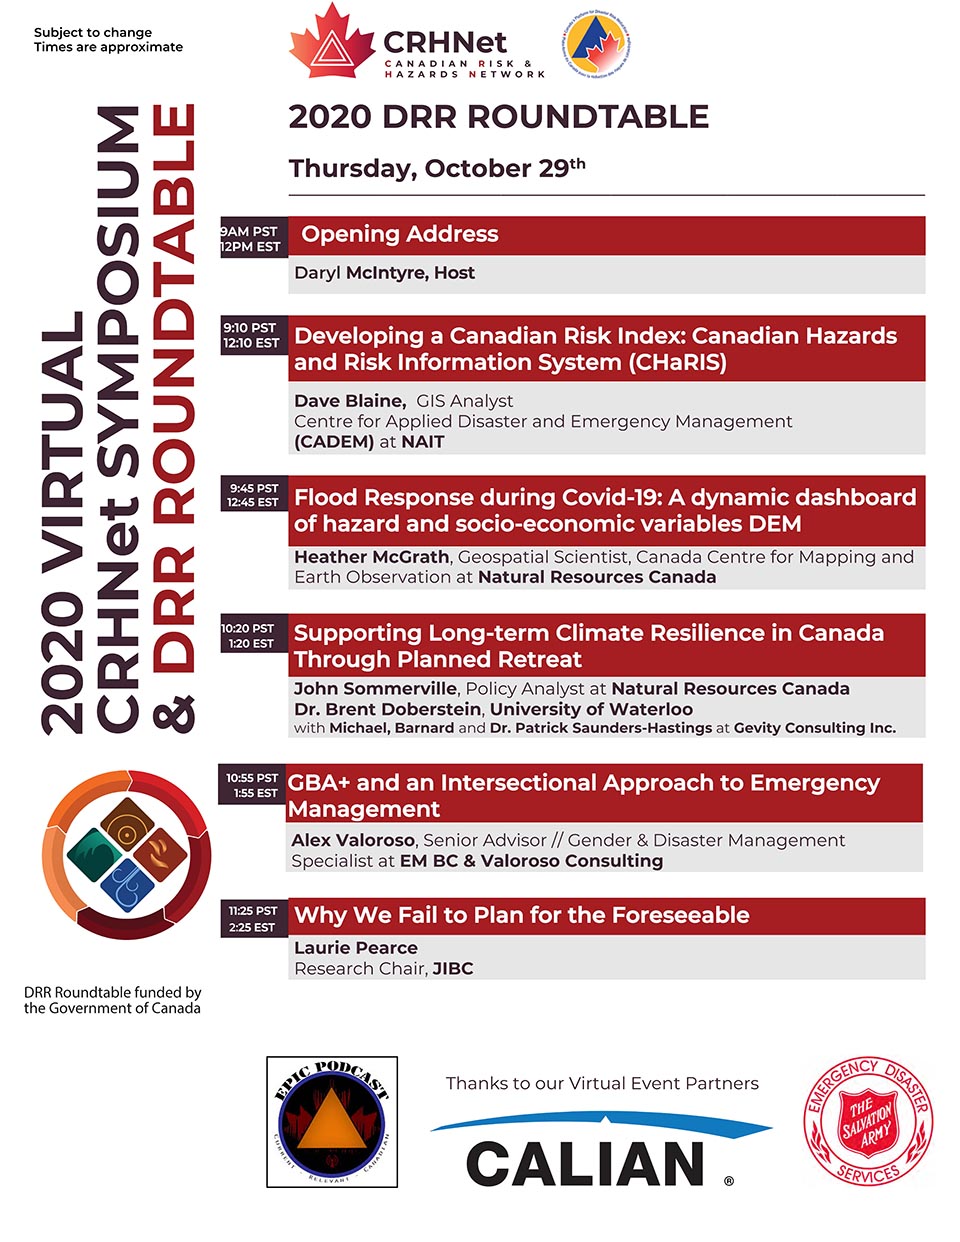 CRHNet Symposium – Thursday, October 29, 2020